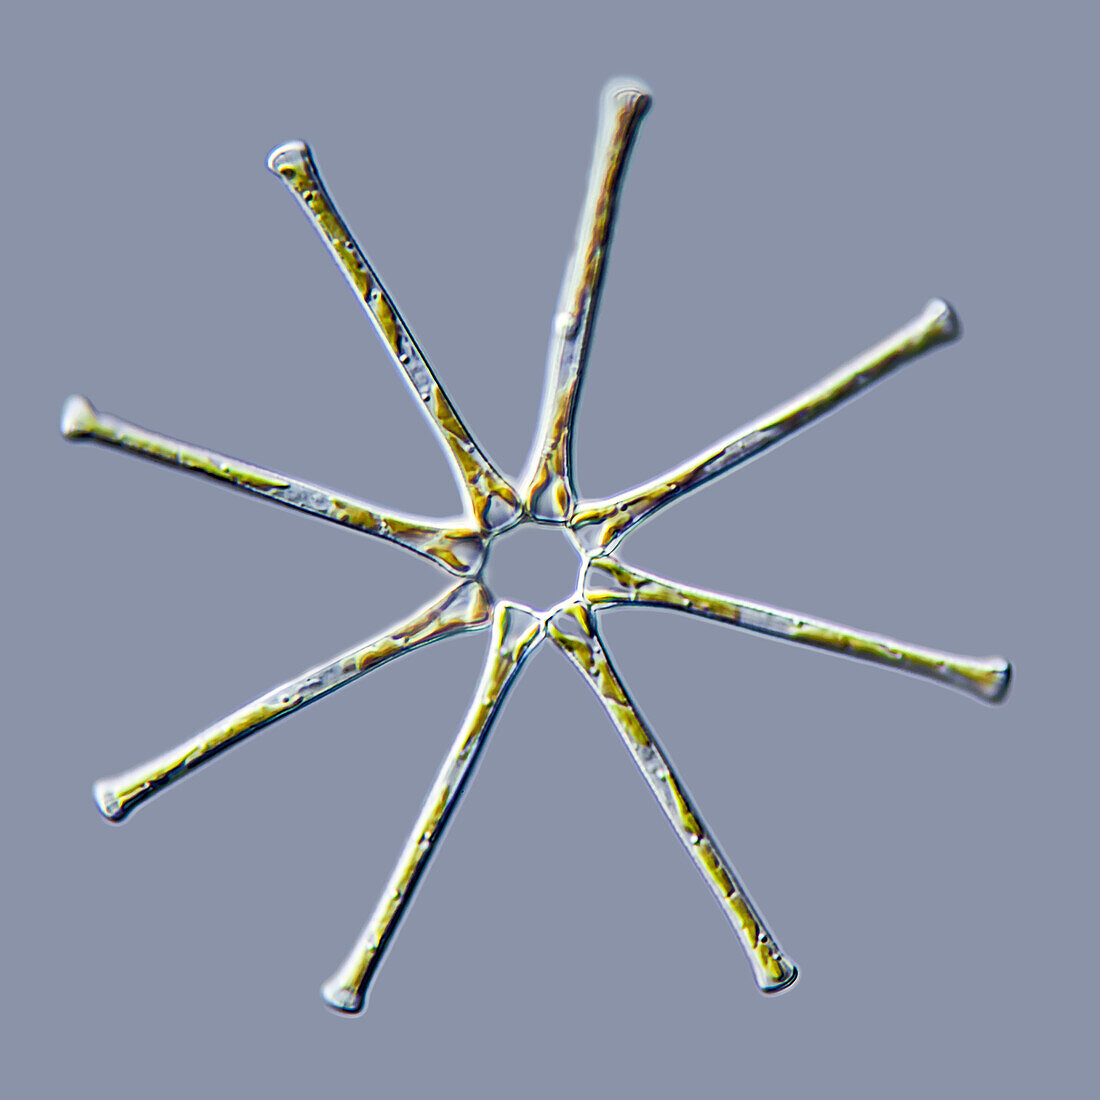 Diploneis freshwater diatom colony, light micrograph